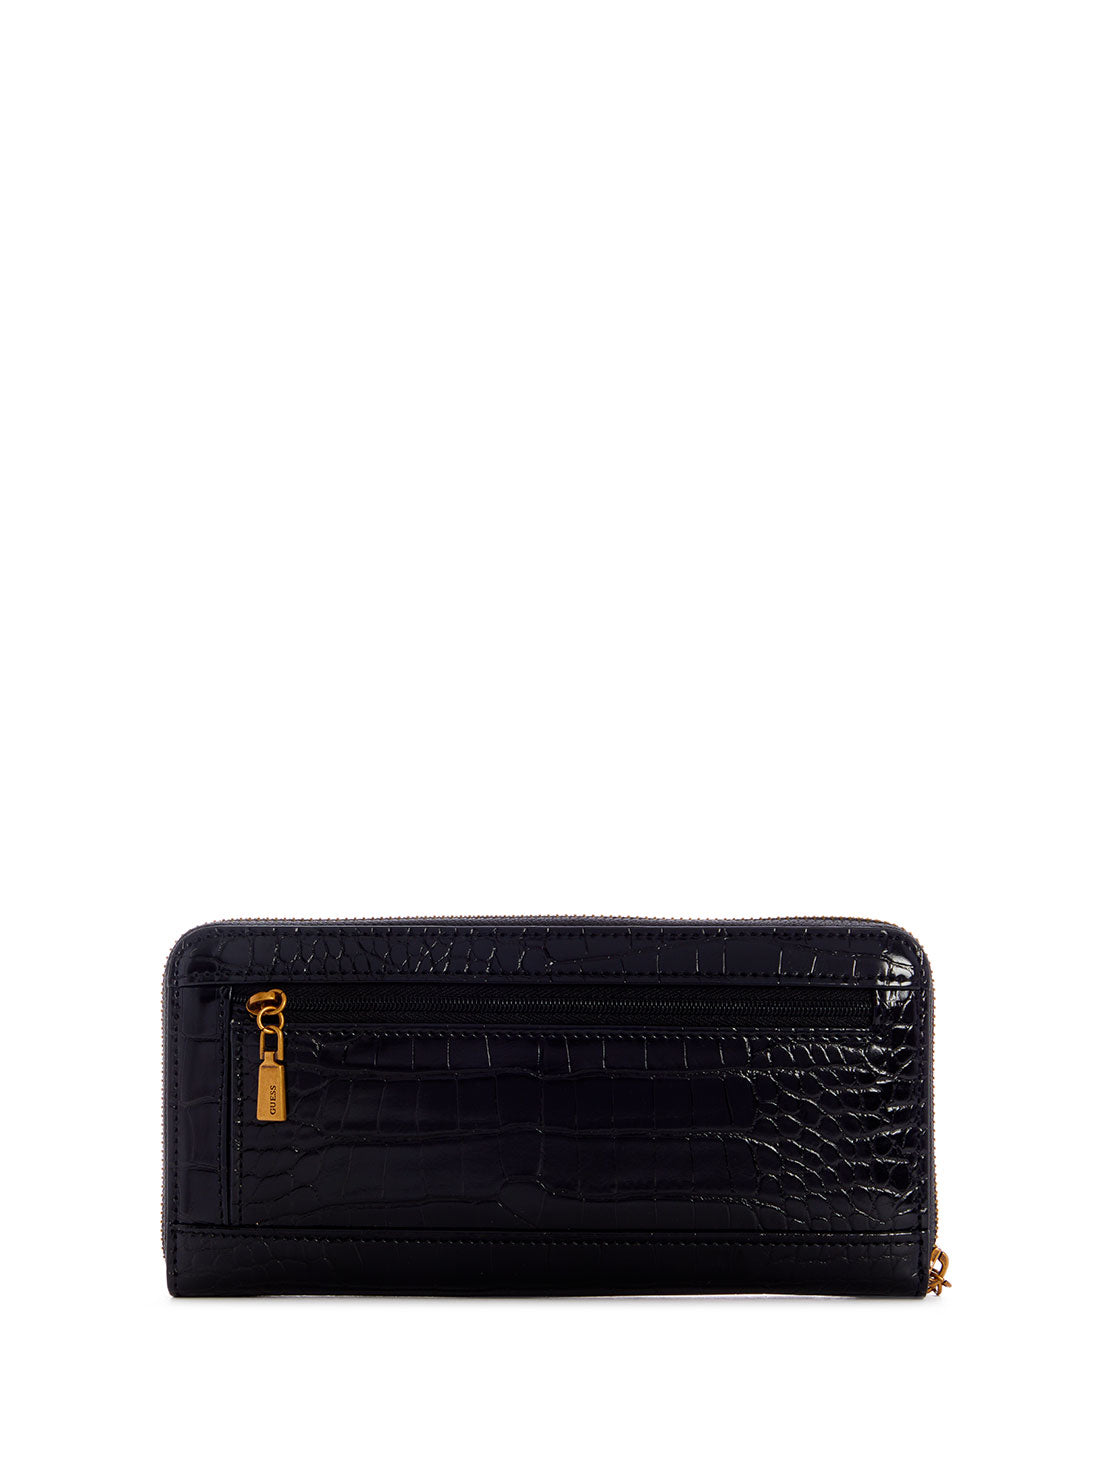 GUESS Women's Black Laurel Croco Large Wallet CB850046 Back View